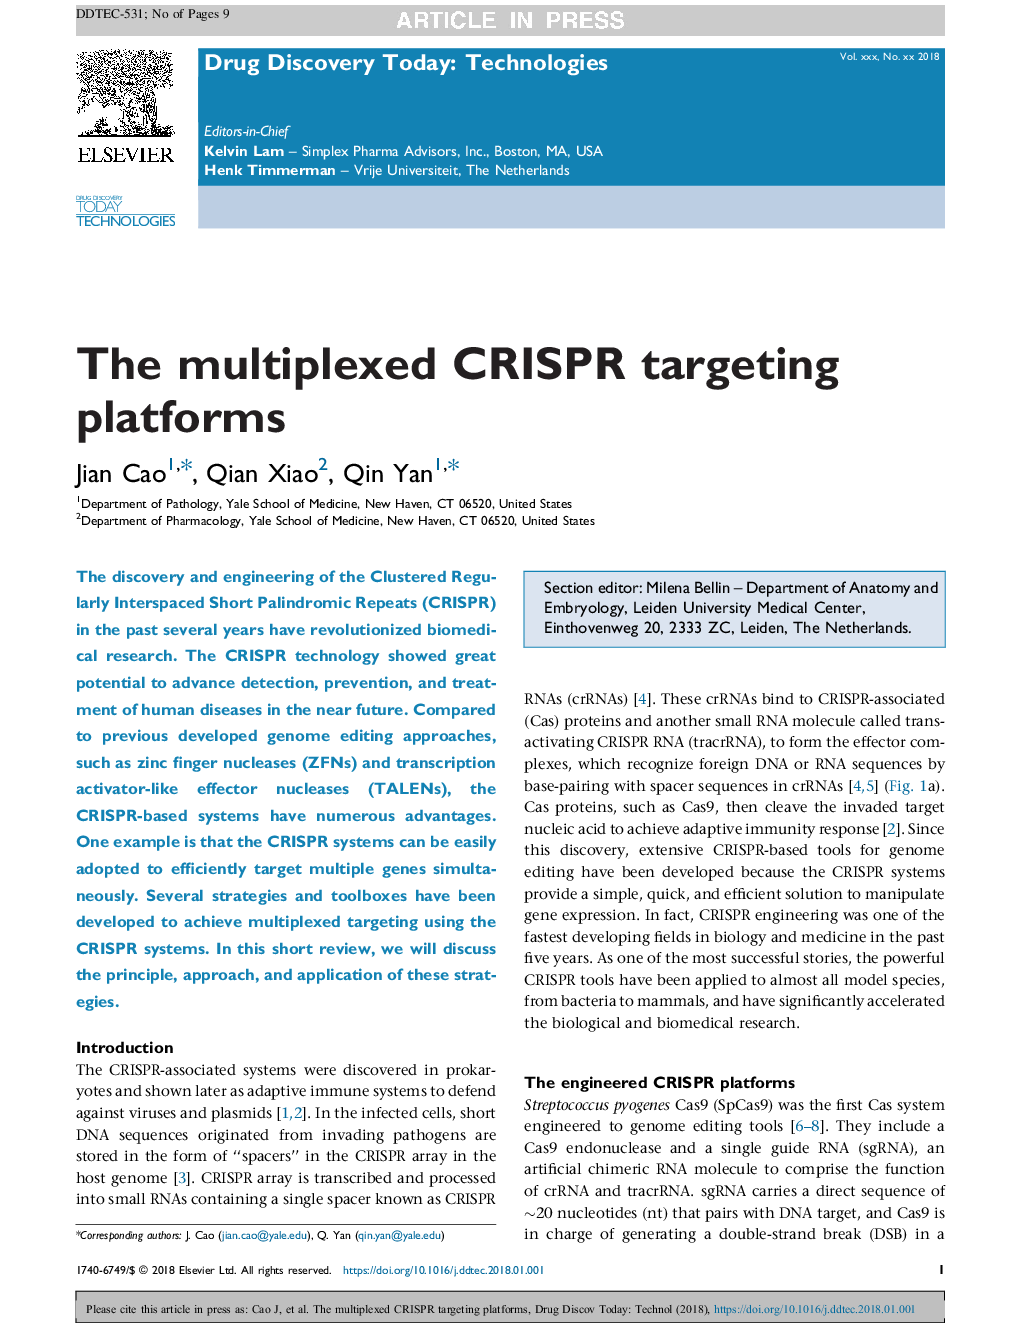 The multiplexed CRISPR targeting platforms